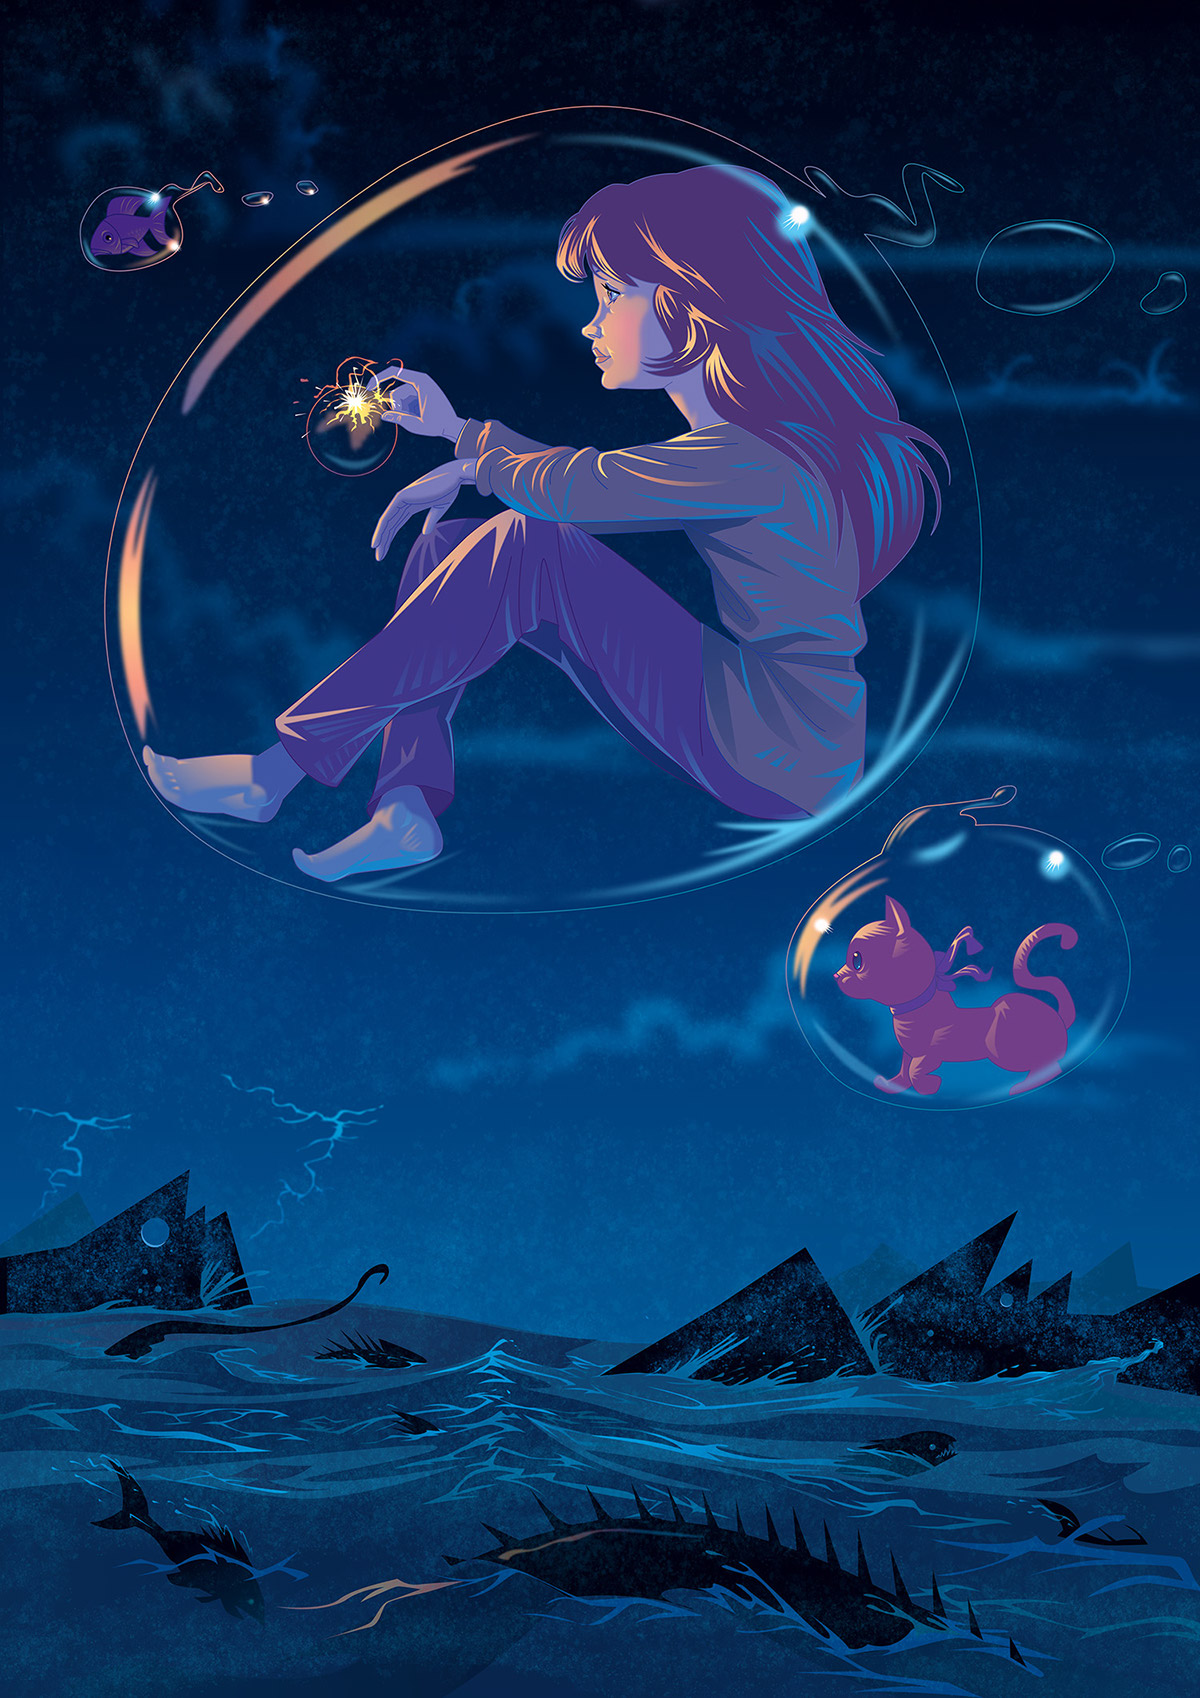 girl manga Cat portrait maxfield parrish rockwell romance fantasy Walt Disney